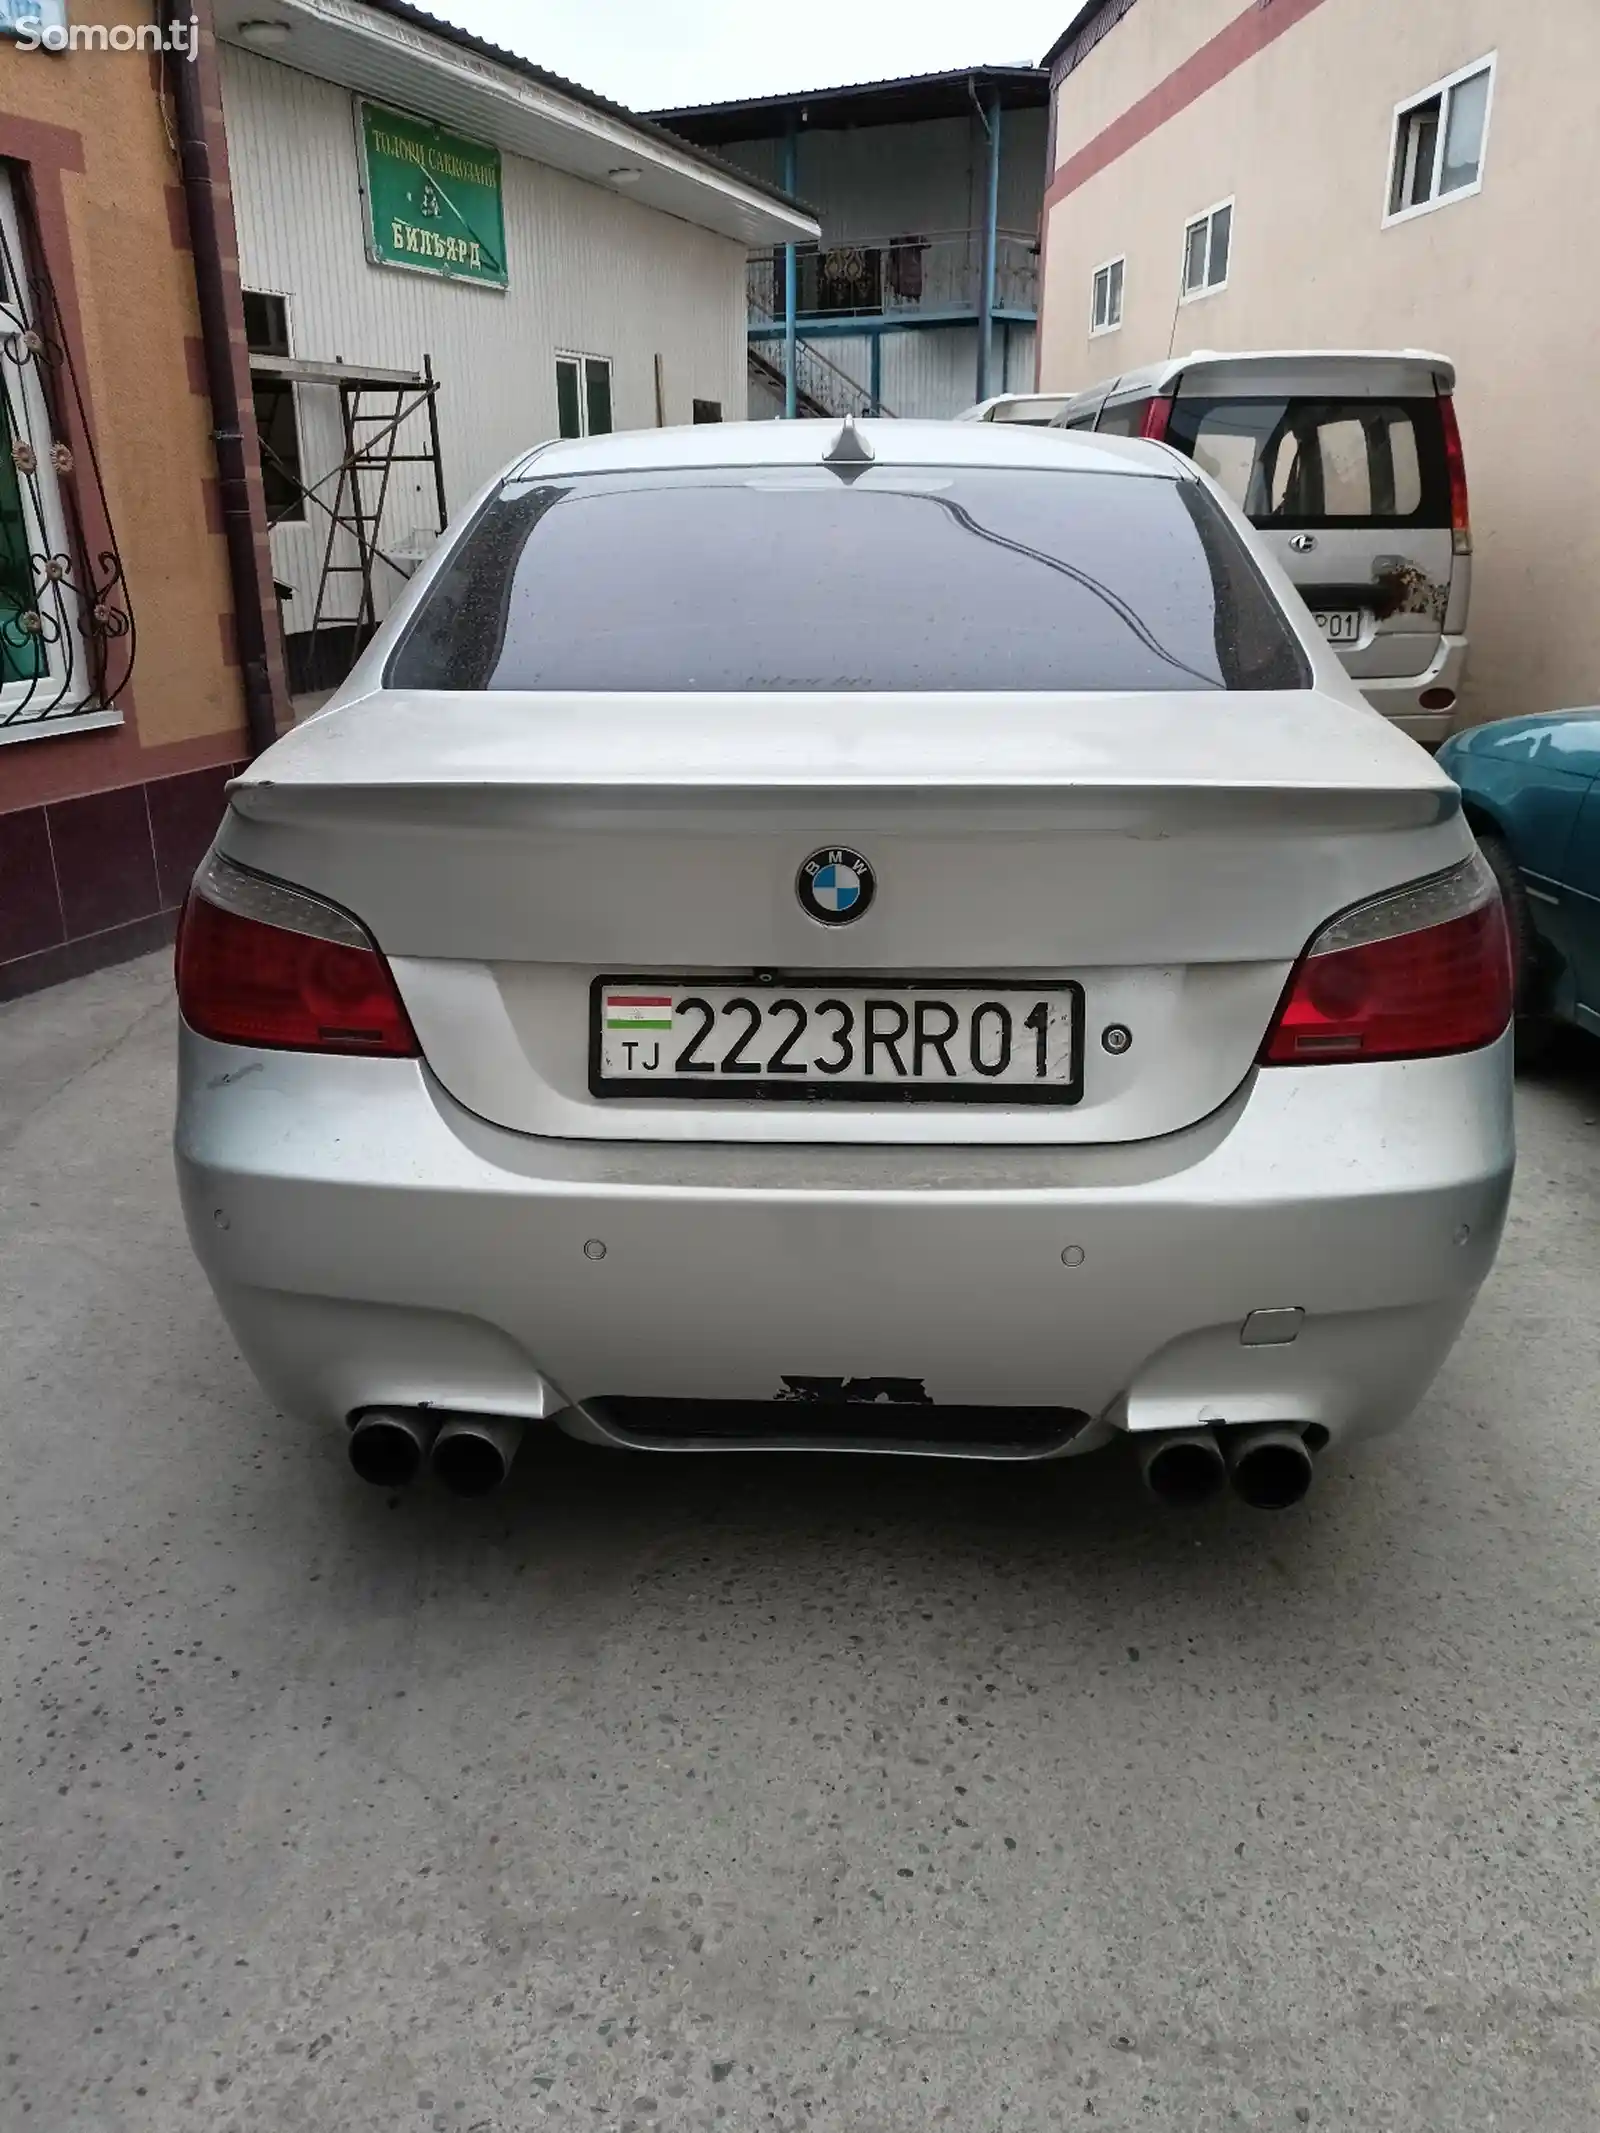 BMW 5 series, 2006-2